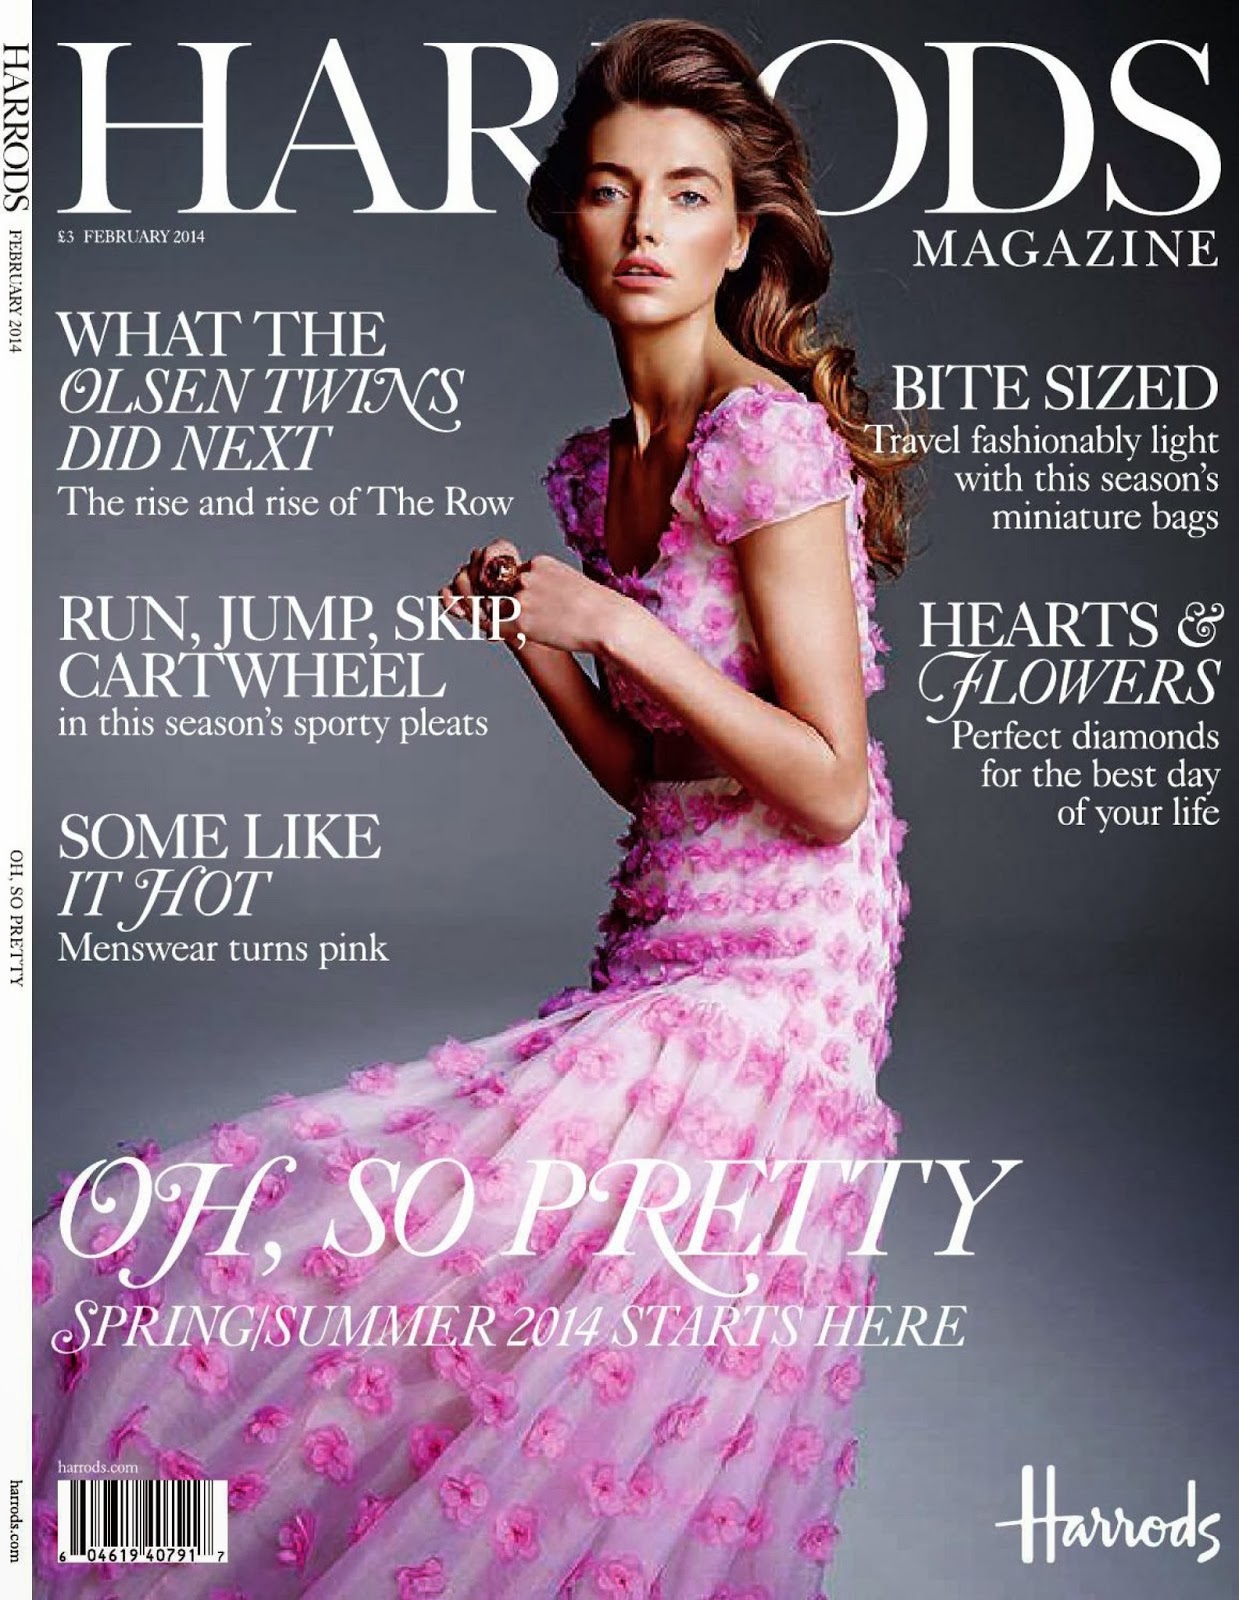 Magazines - The Charmer Pages : Alina Baikova For Harrods UK February 2014